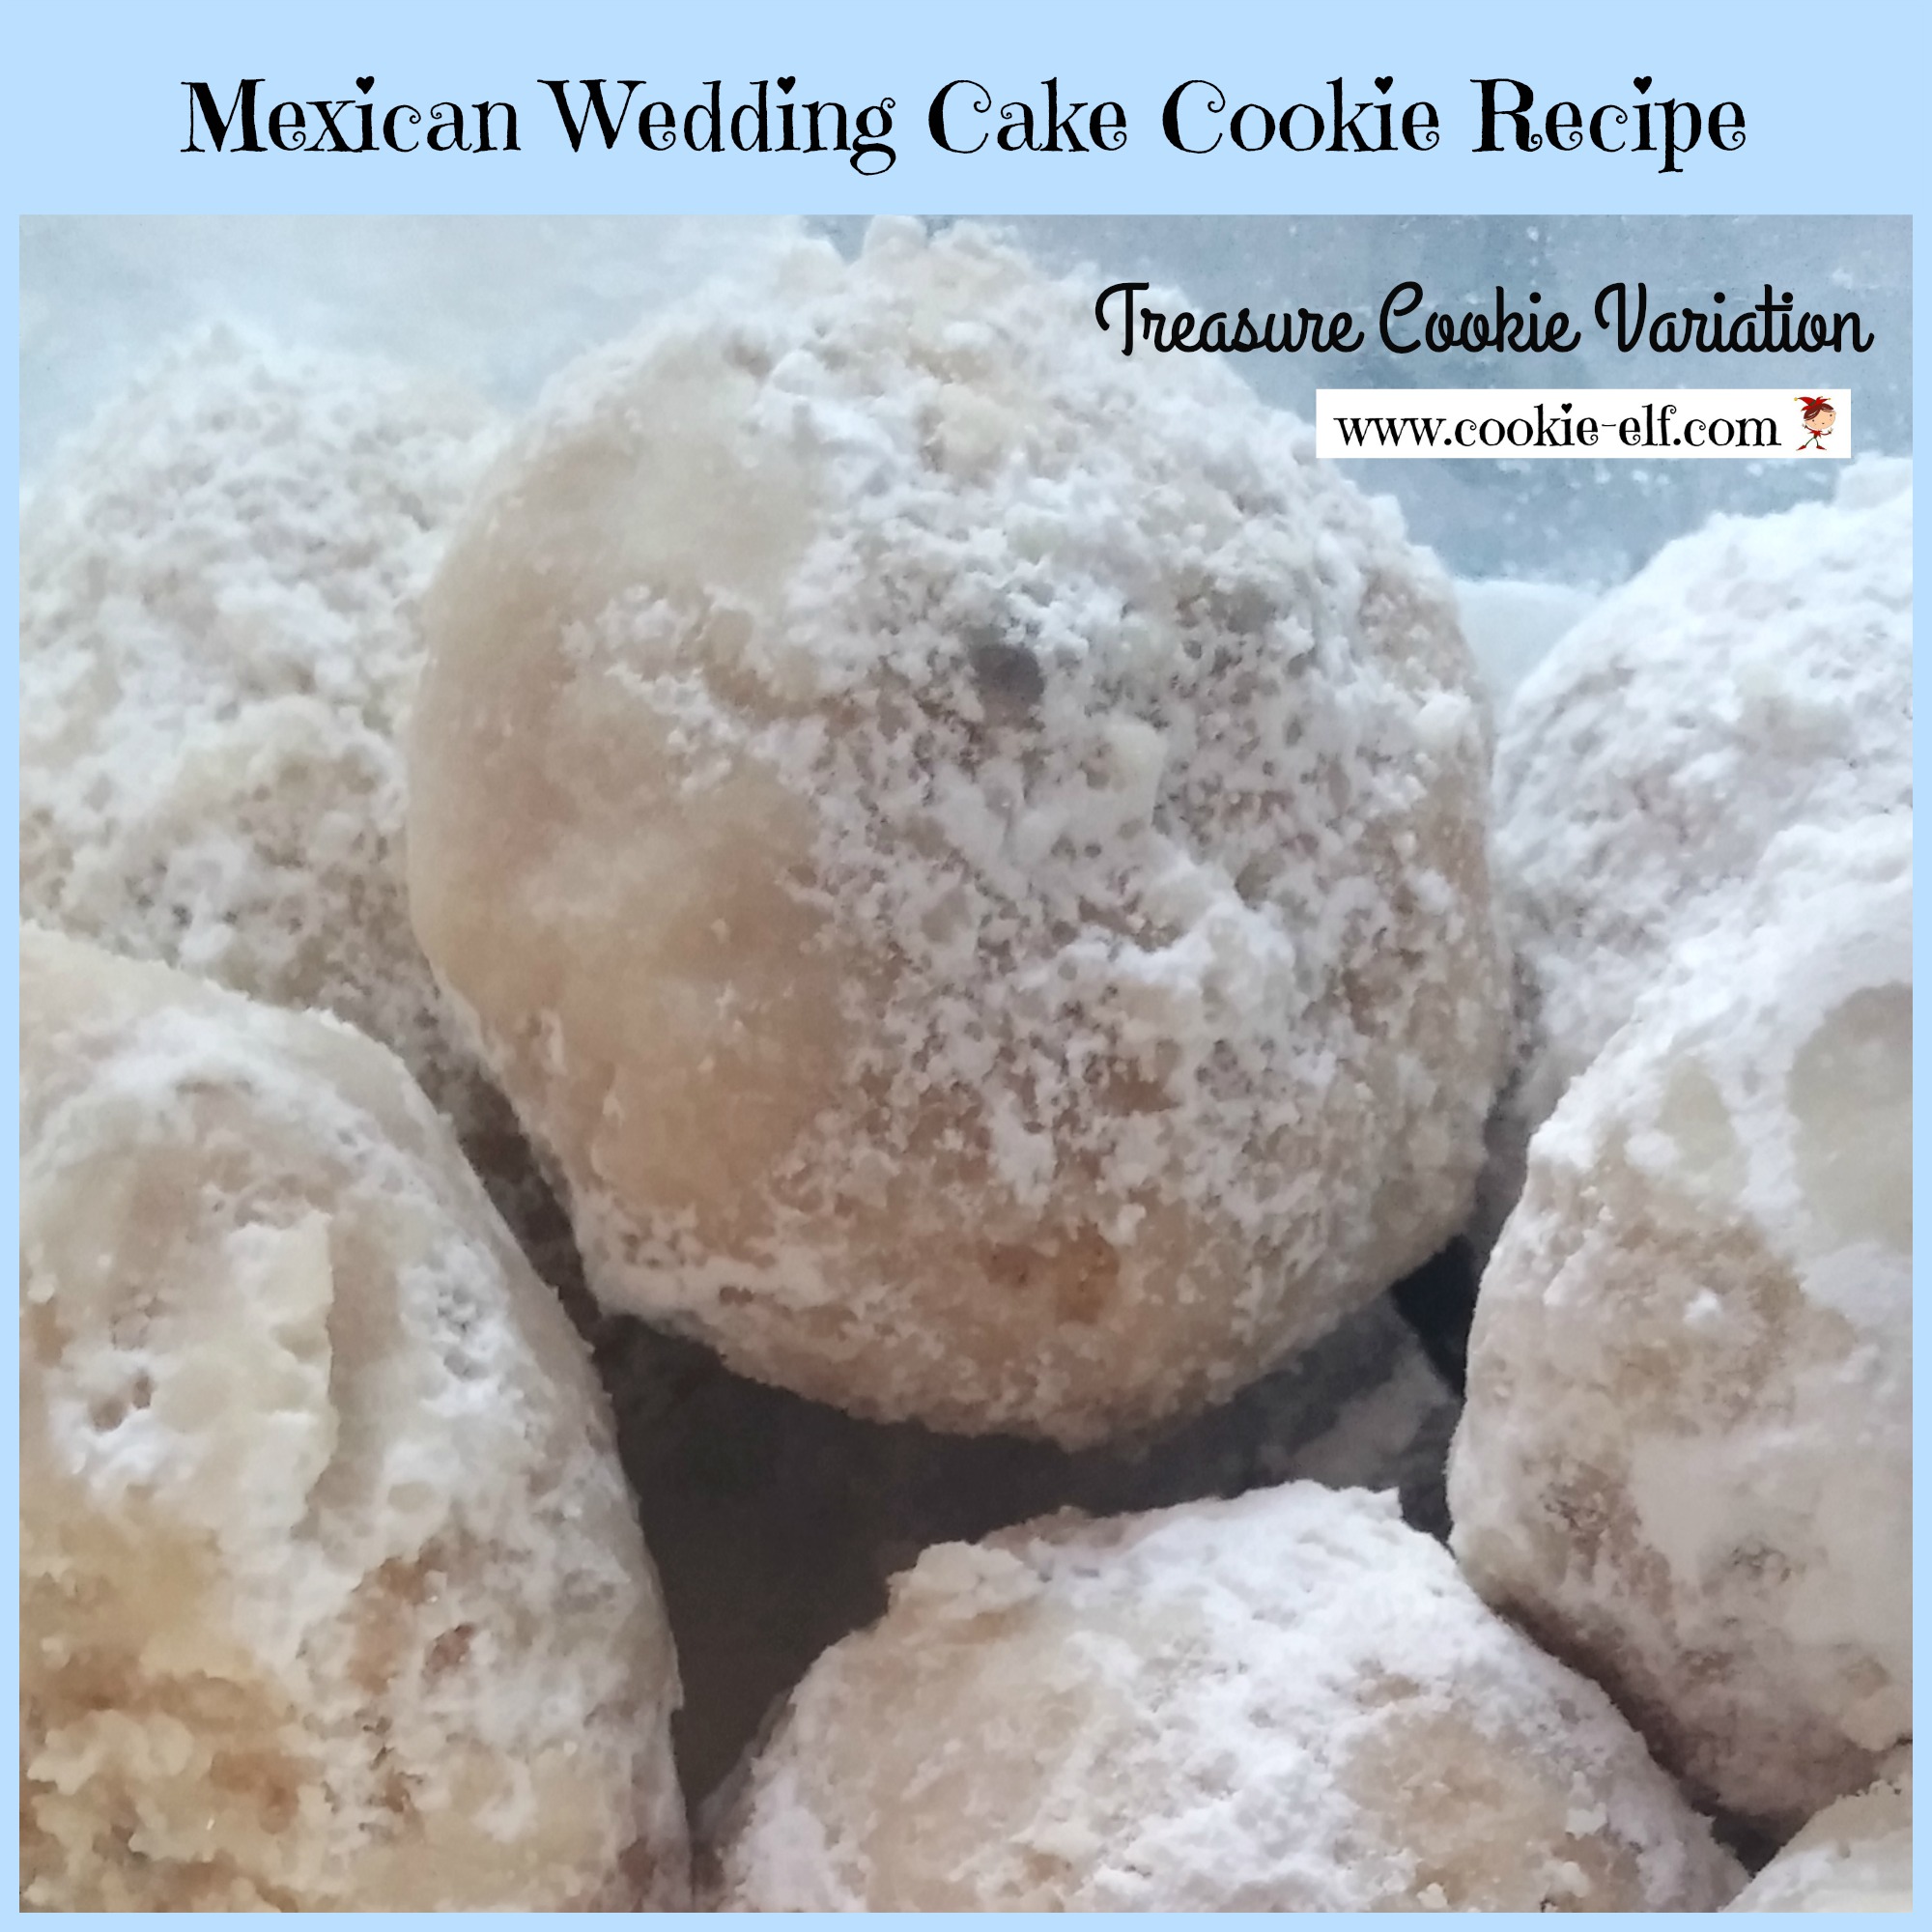 Mexican Wedding Cake Cookie Recipe: Treasure Cookies variation from The Cookie Elf